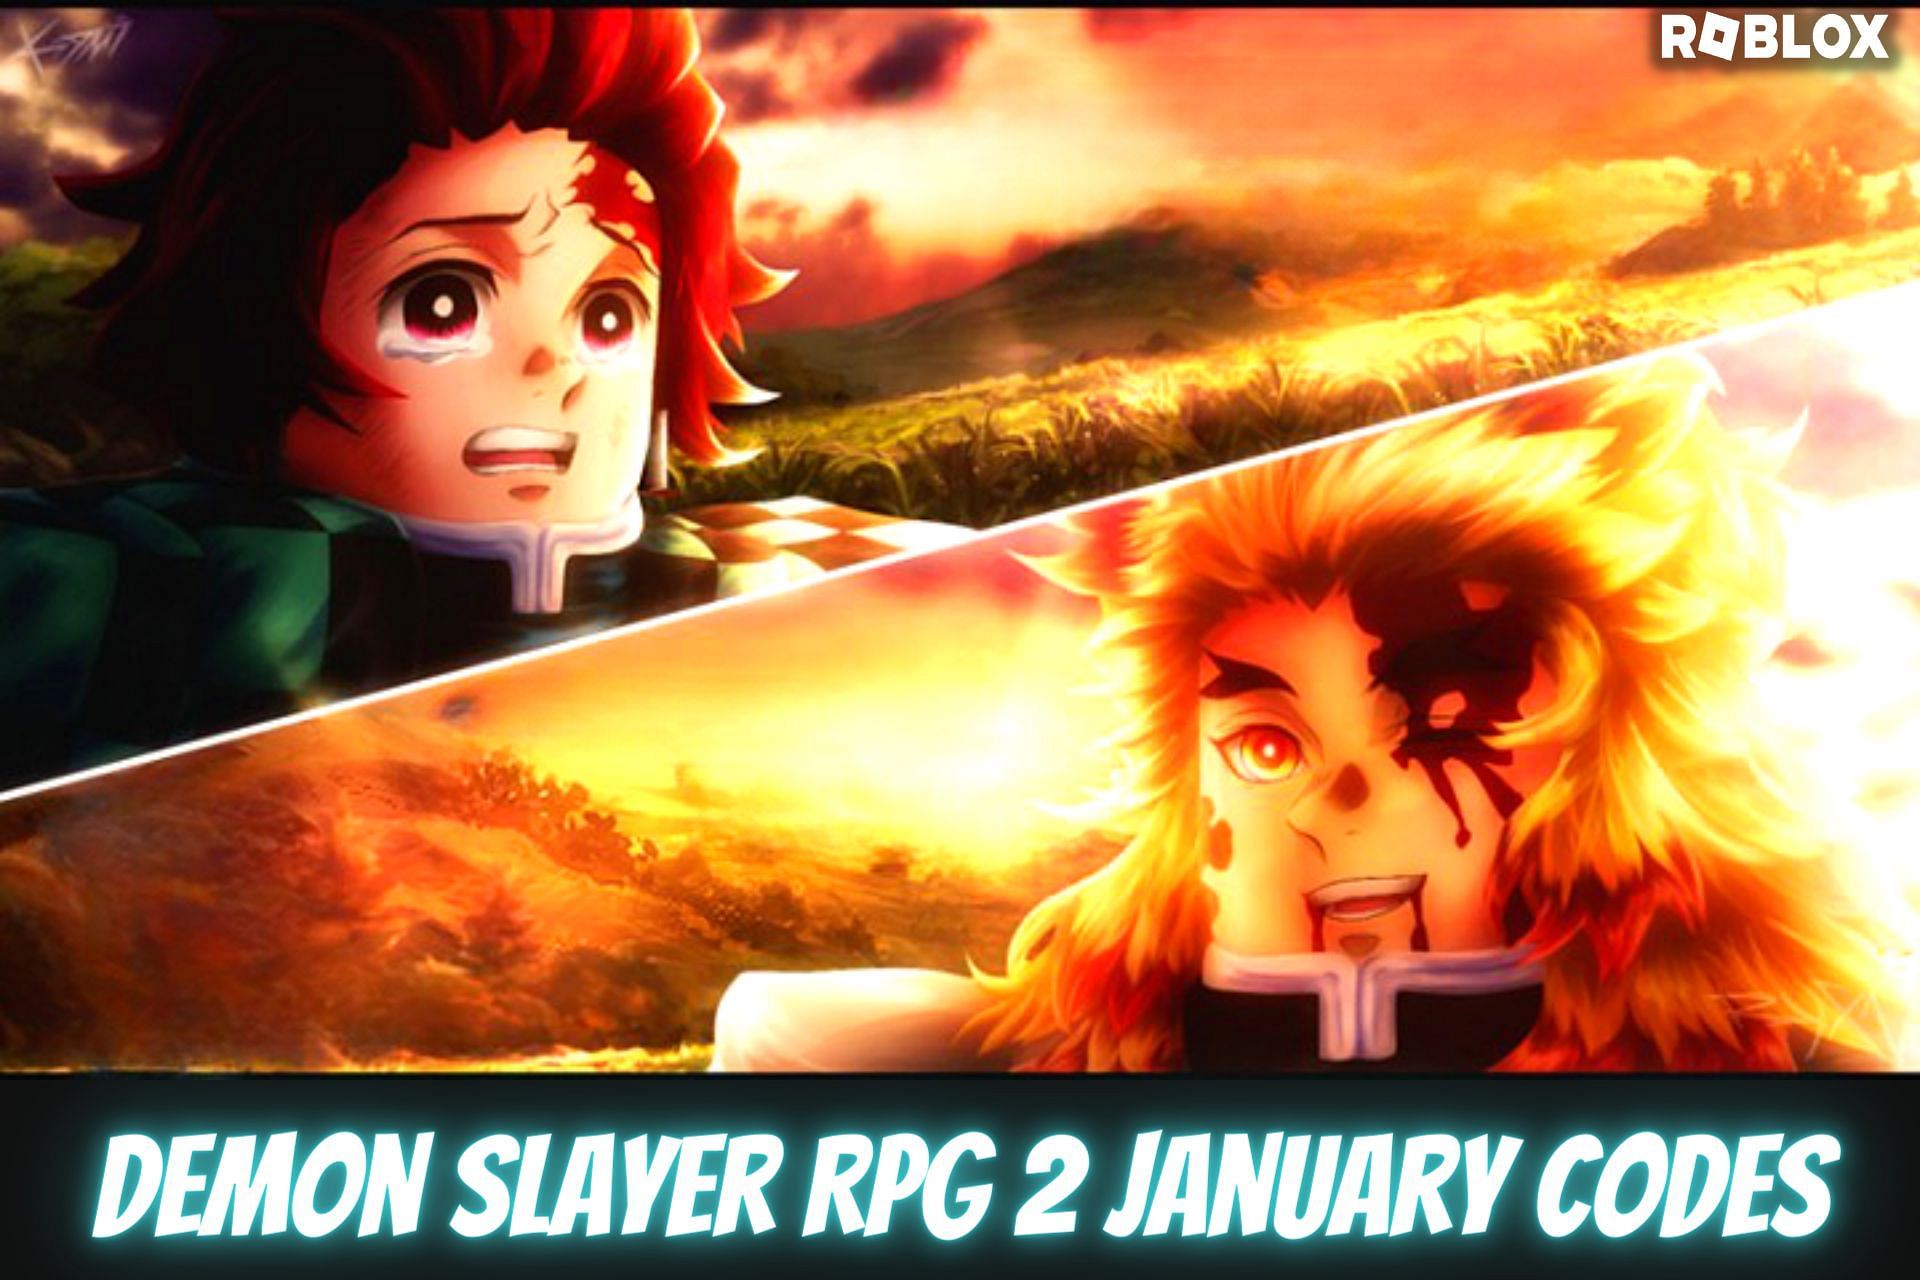 Roblox Demon Slayer RPG 2 codes (January 2023)